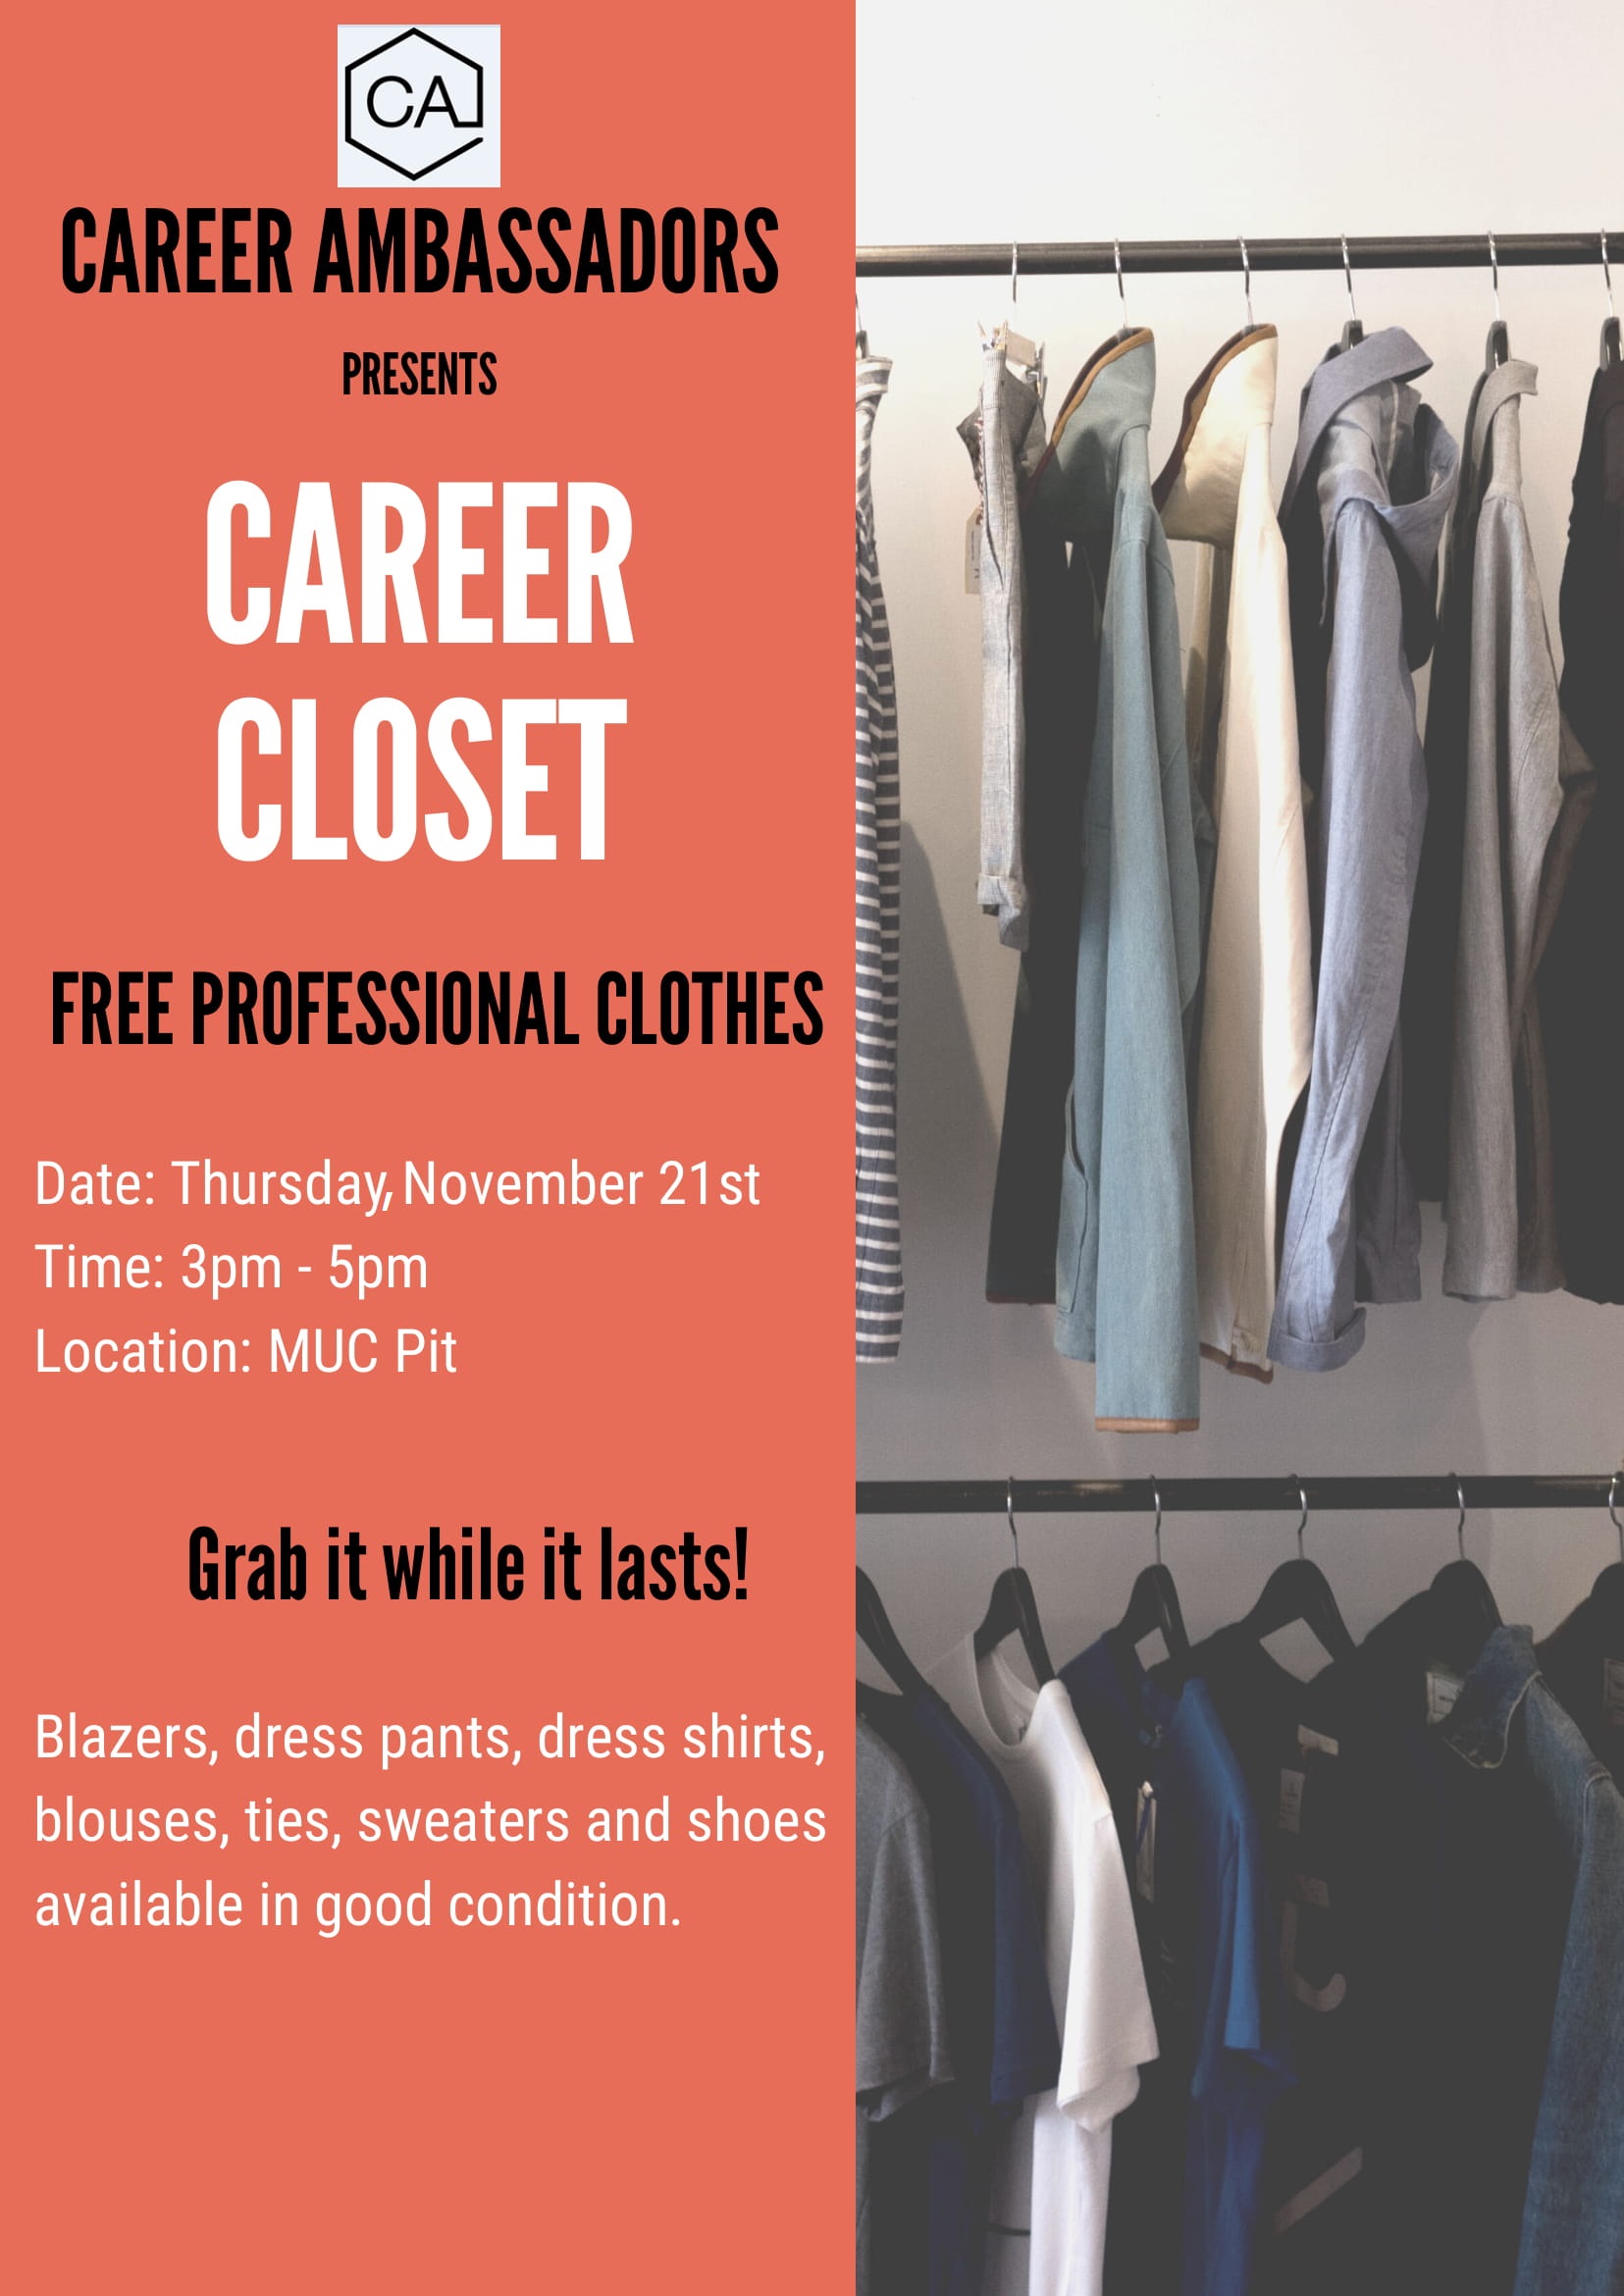 Career Closet providing free dress clothes for students